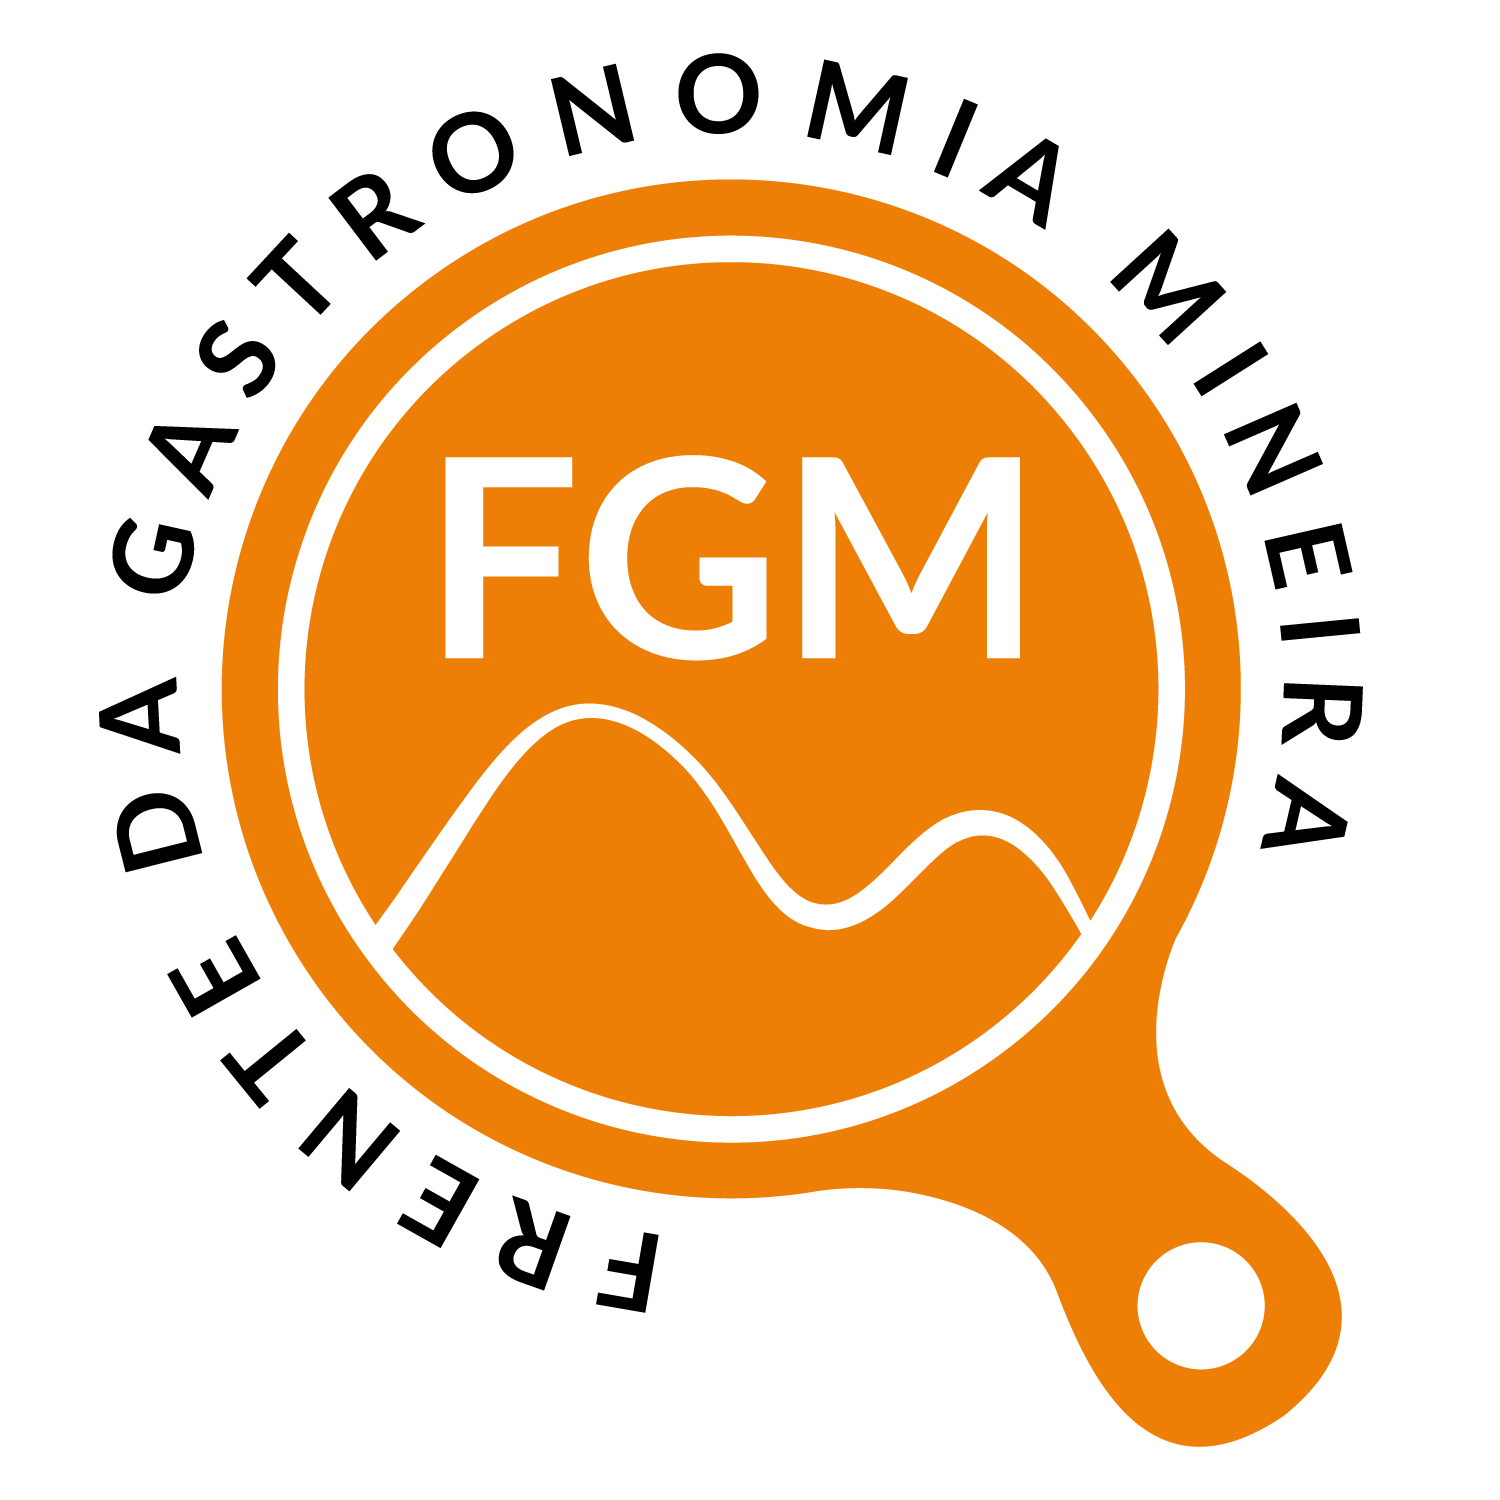 Logo FGM